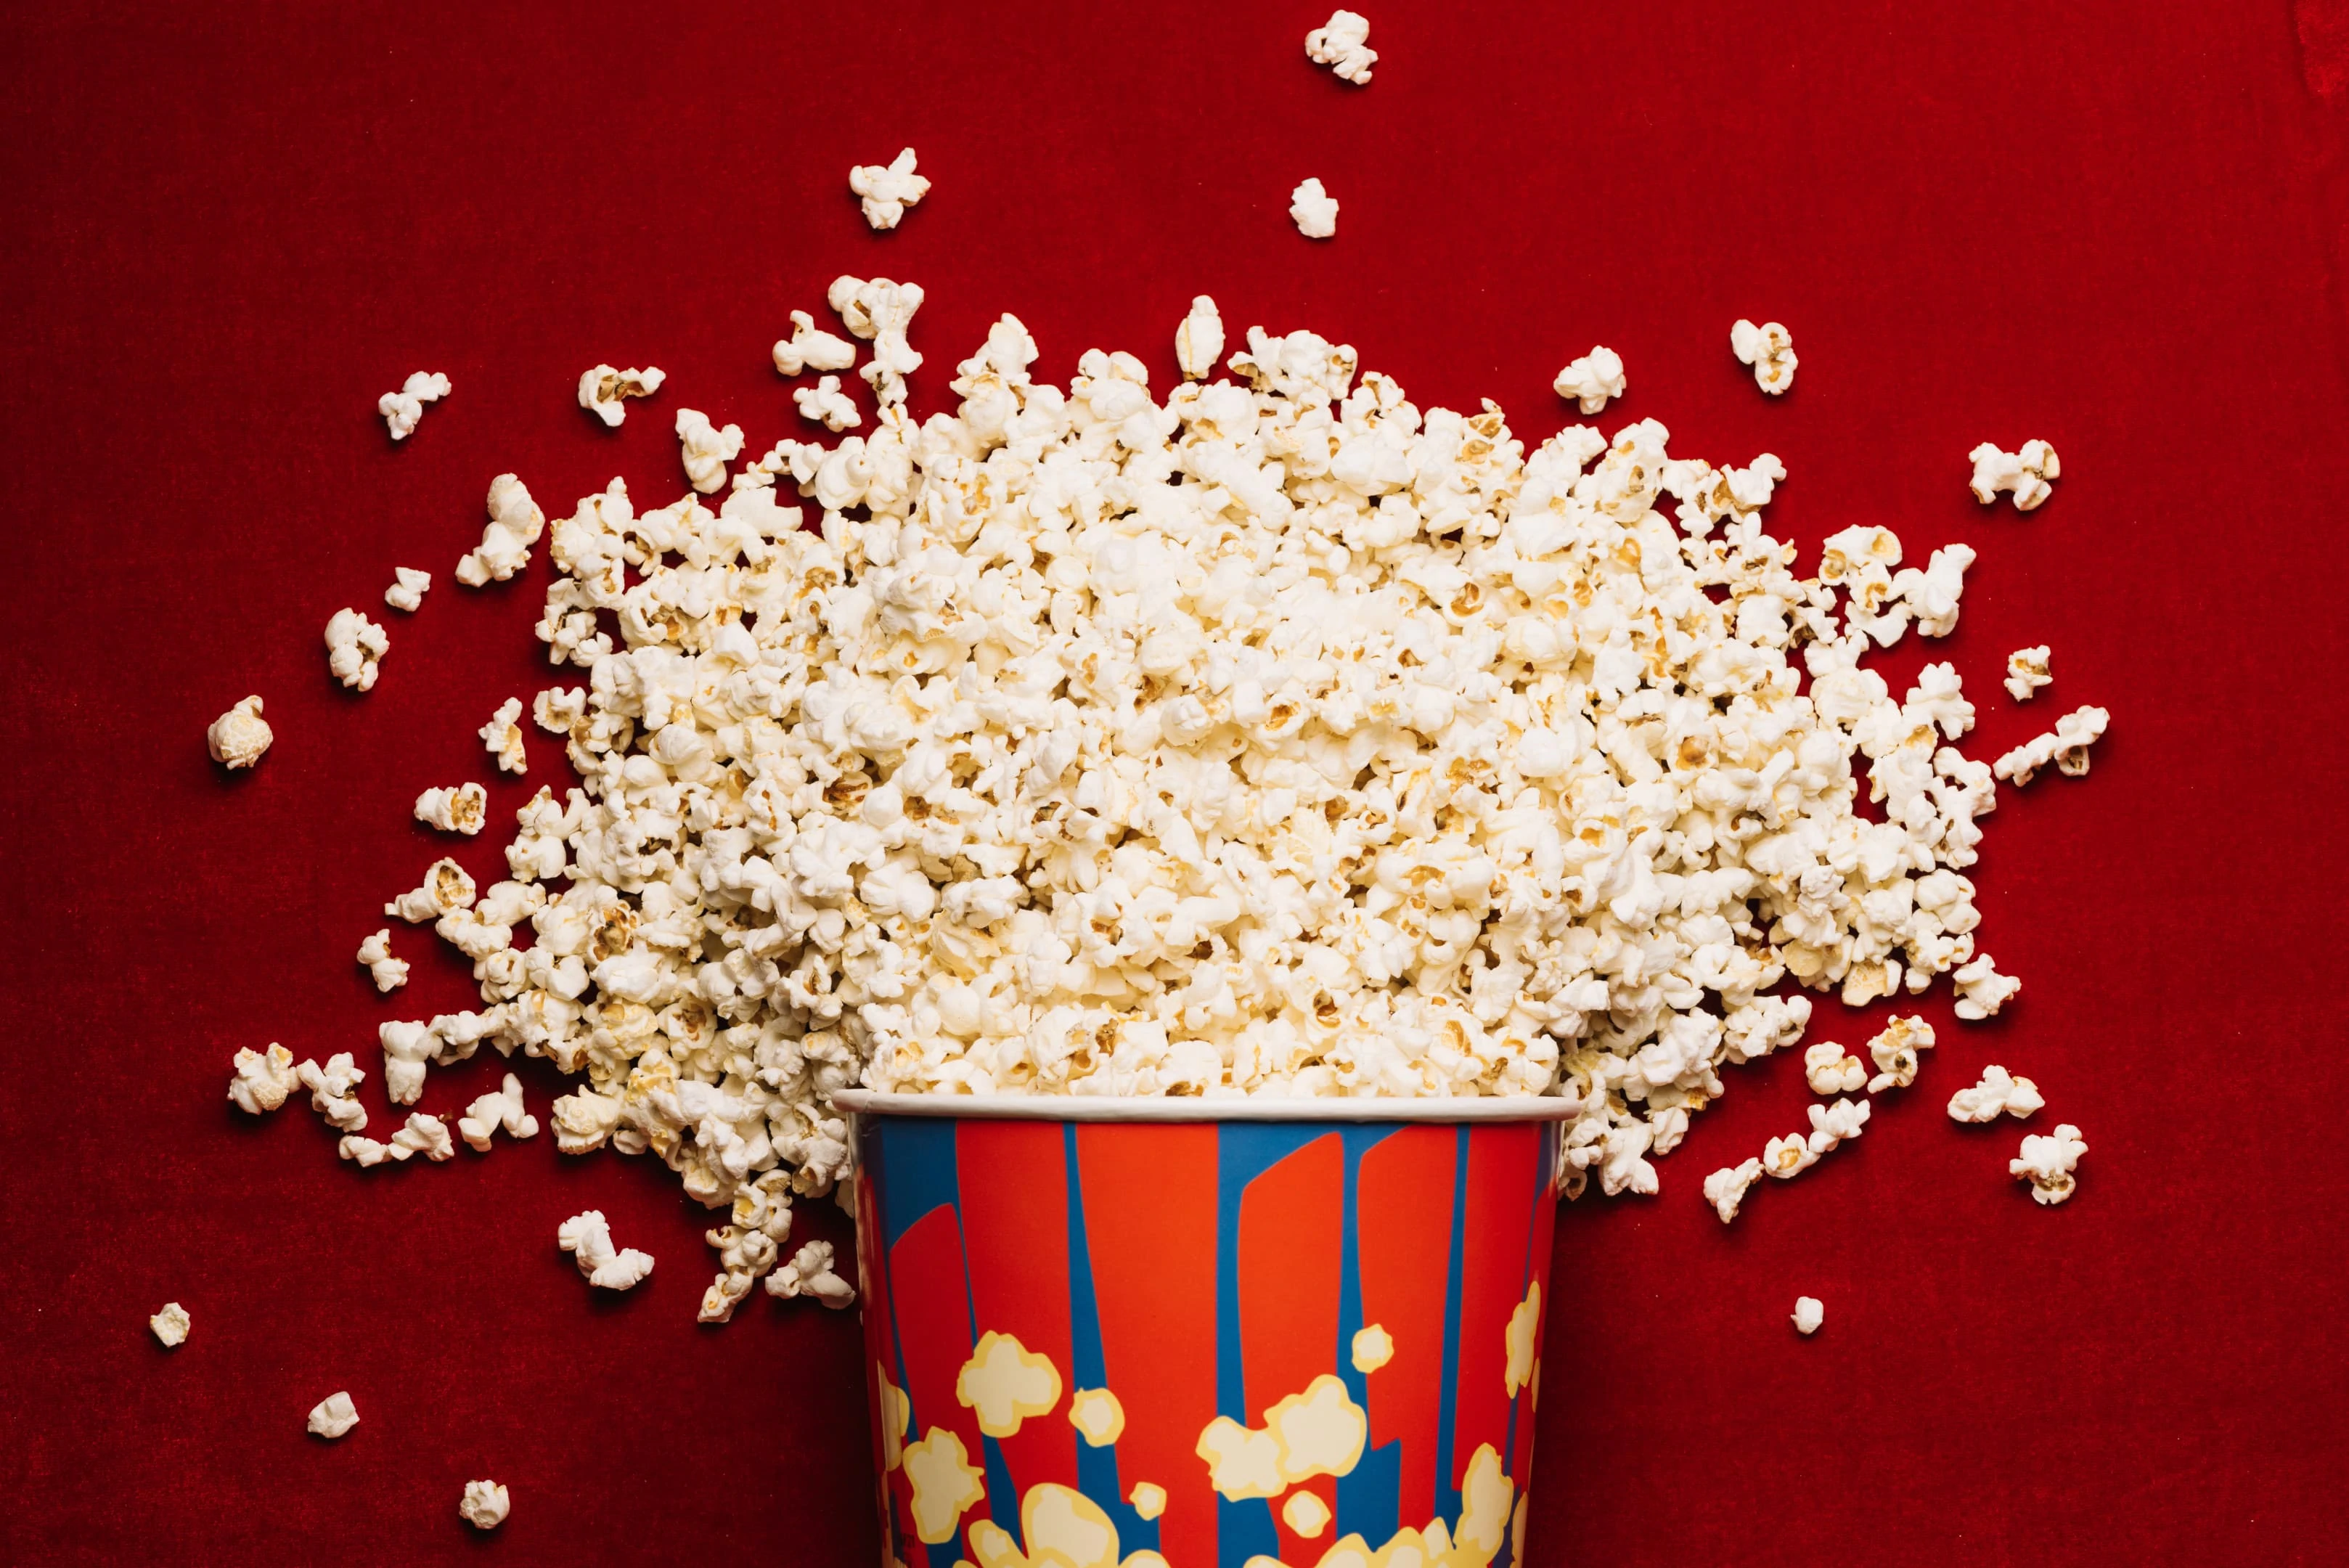 Popcorn spilled from striped bucket on cinema floor